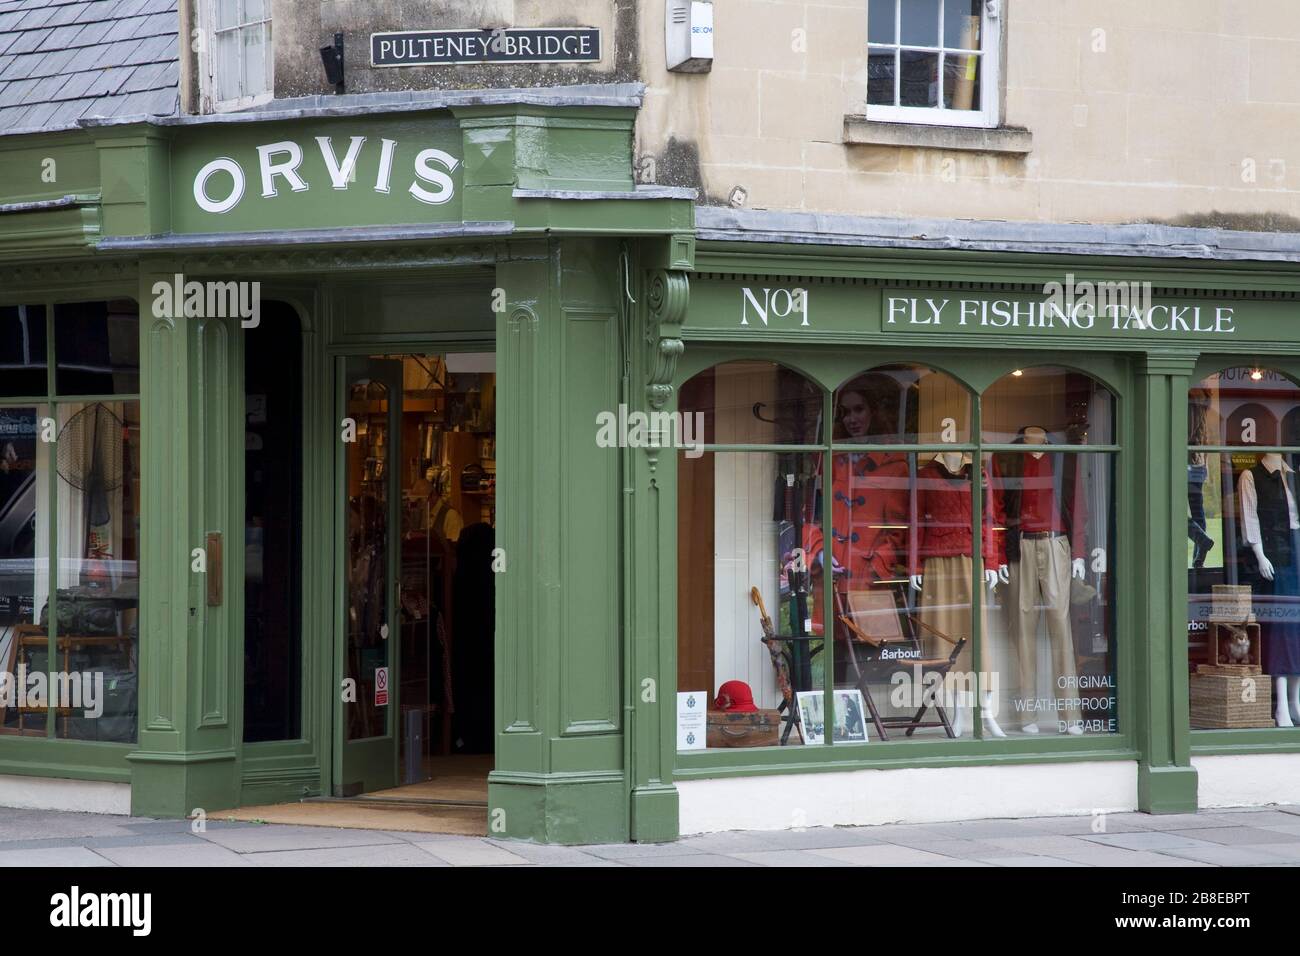 Orvis shop on Pulteney Bridge, Bath, Somerset, England, United Kingdom,  Great Britain, Europe Stock Photo - Alamy